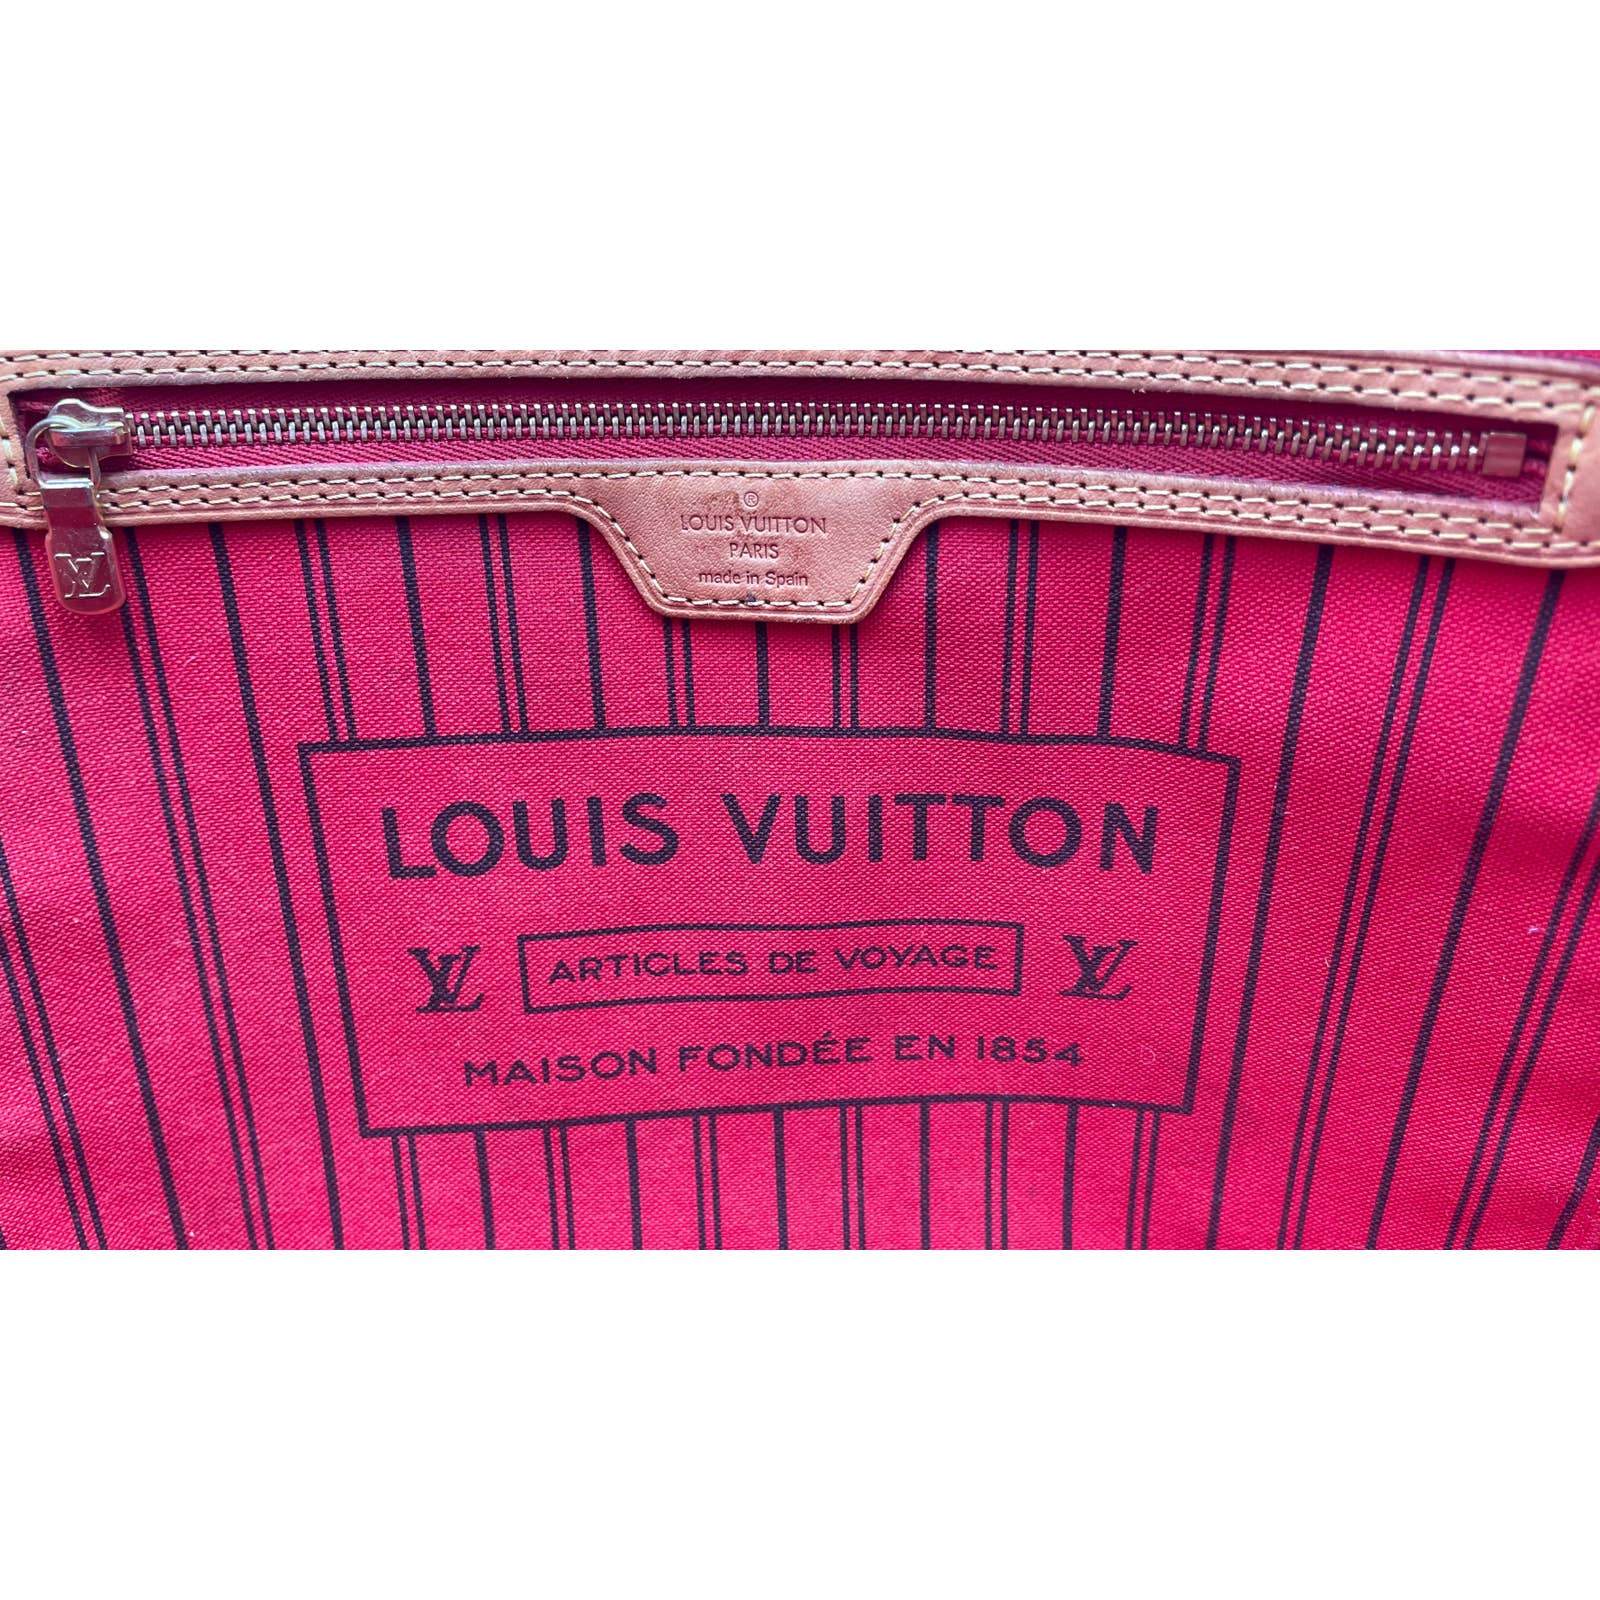 Louis Vuitton Neverfull - Le Look